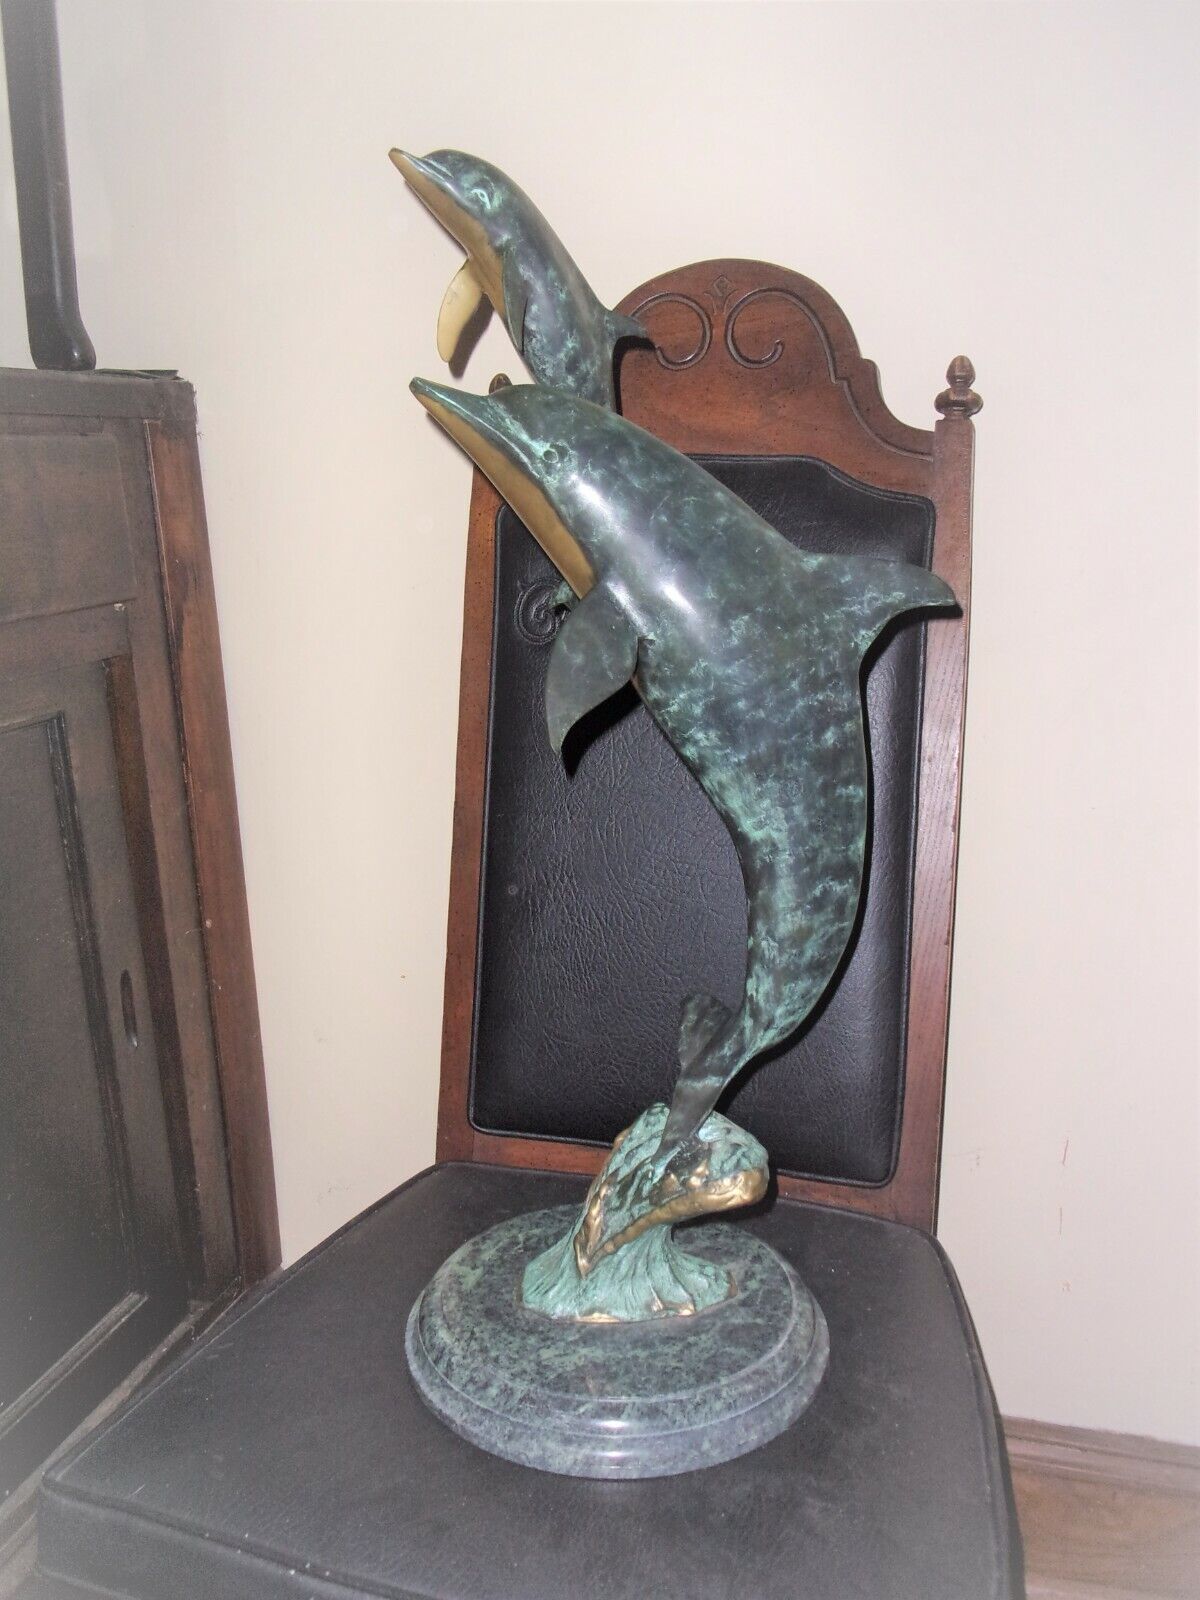 Rare Bronze Dolphin Sculpture By SPI (Water Sculpture)